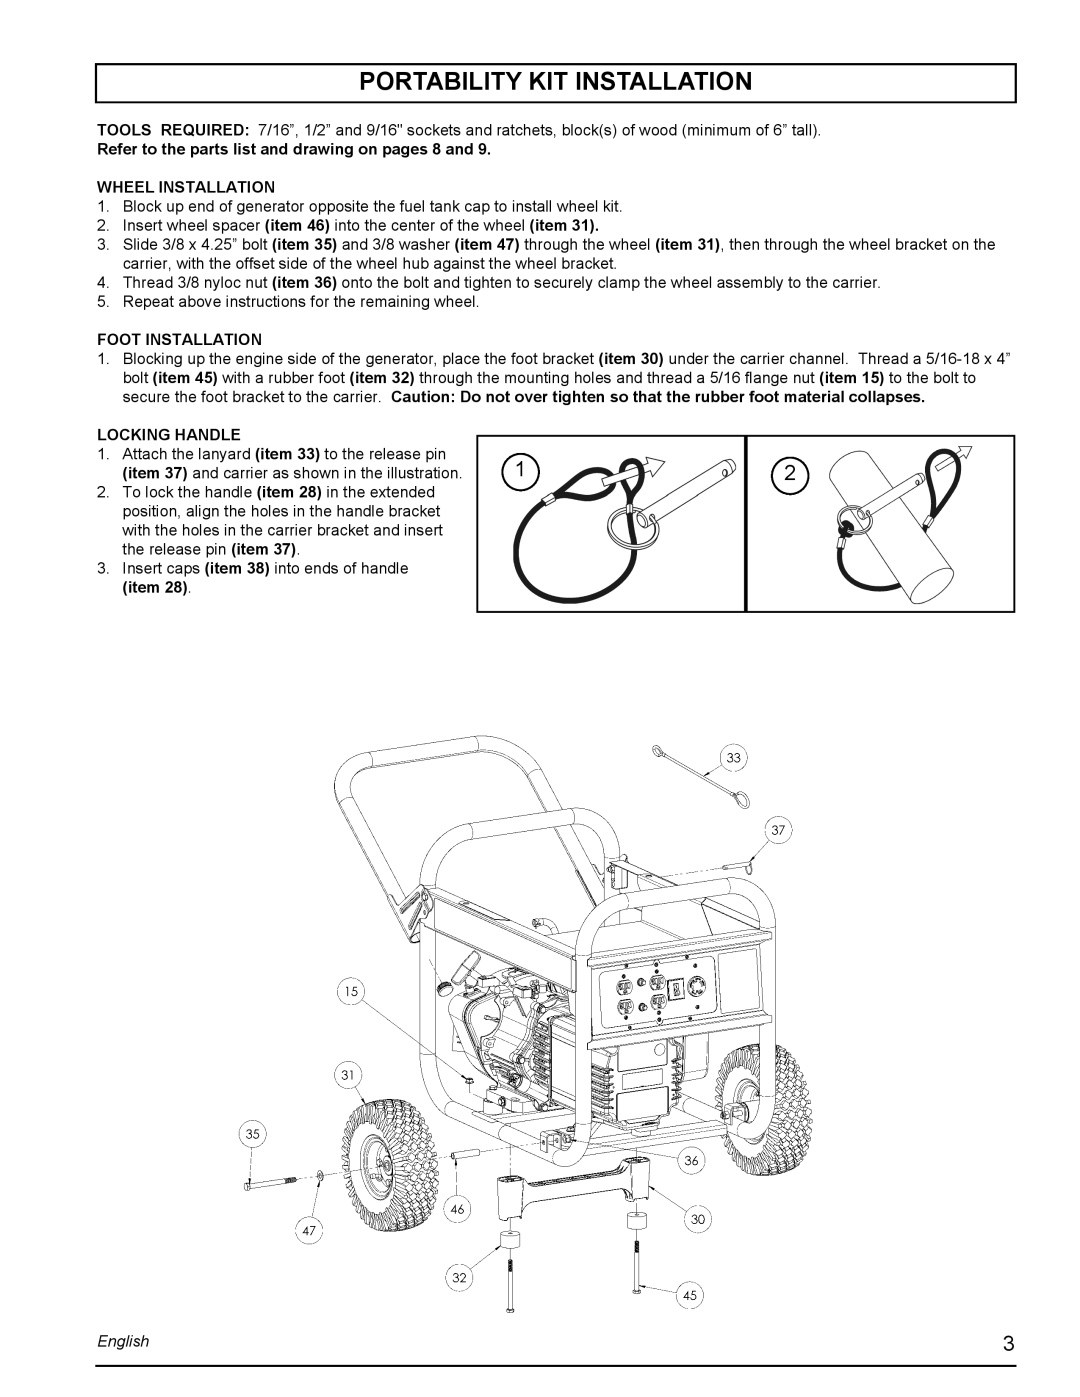 Powermate PMC435251 manual Portability Kit Installation, Wheel Installation, Foot Installation, Locking Handle, English 